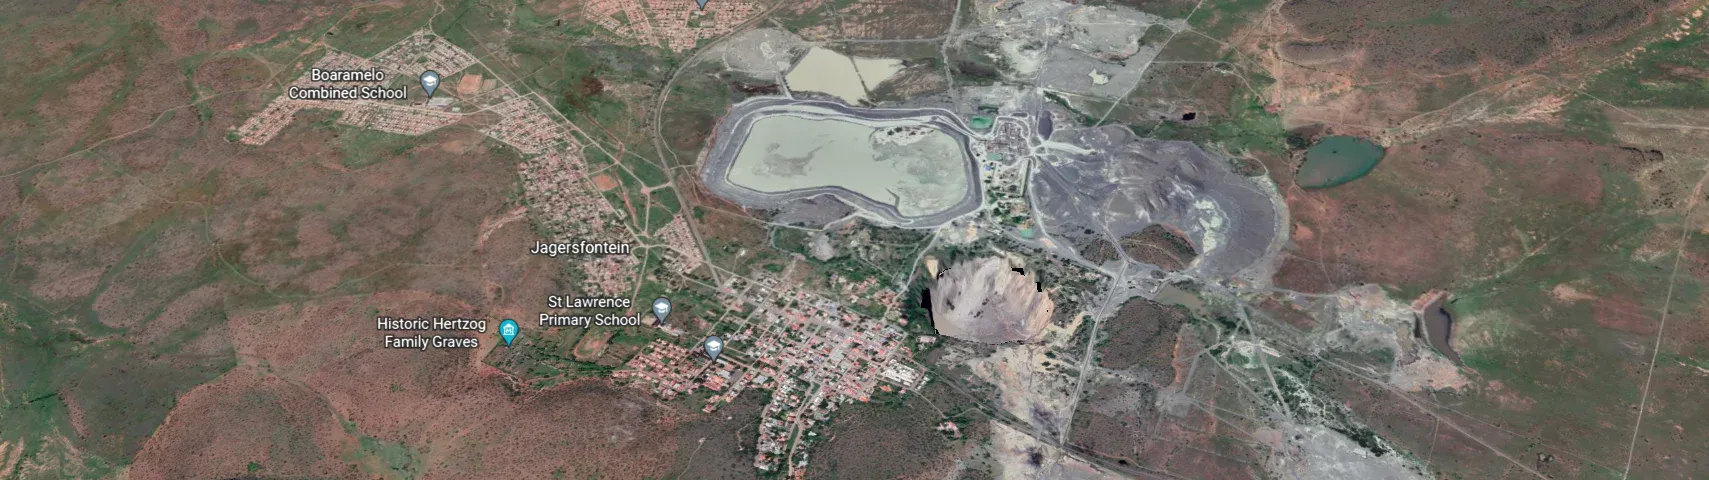 dam failure Jagersfontein Diamond Mine